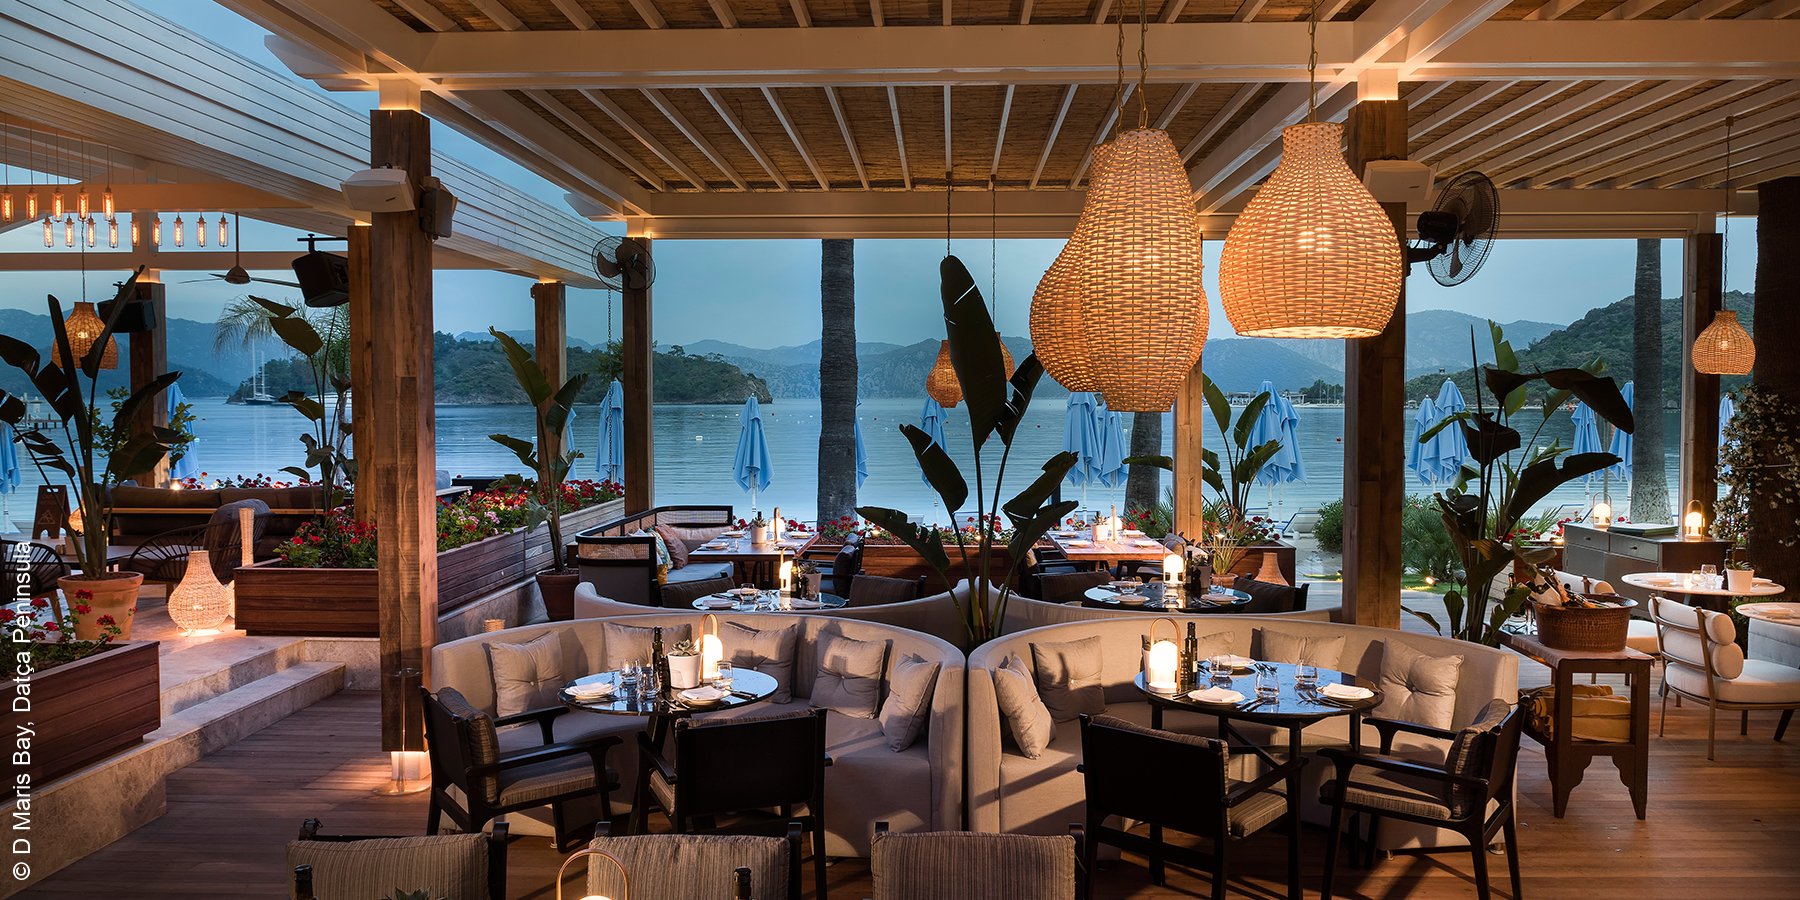 D Maris Bay | Restaurant 2 | Türkei | luxuszeit.com